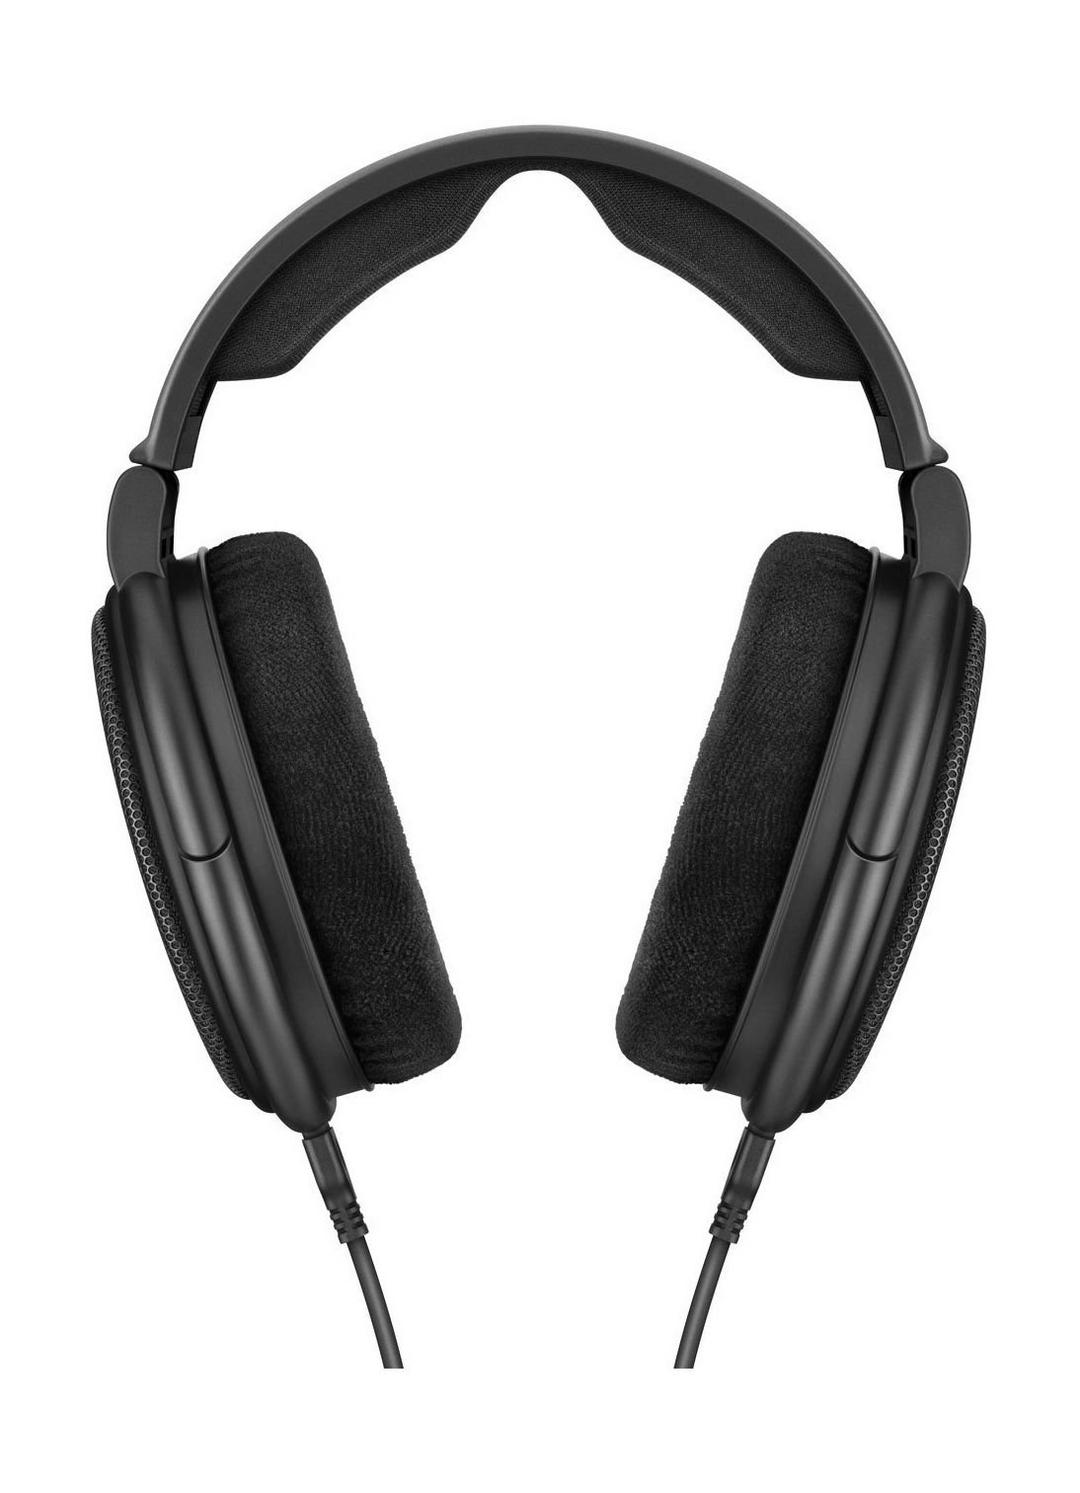 Sennheiser HiRes Audiophile Open Back Headphone (HD 660 S) - Black